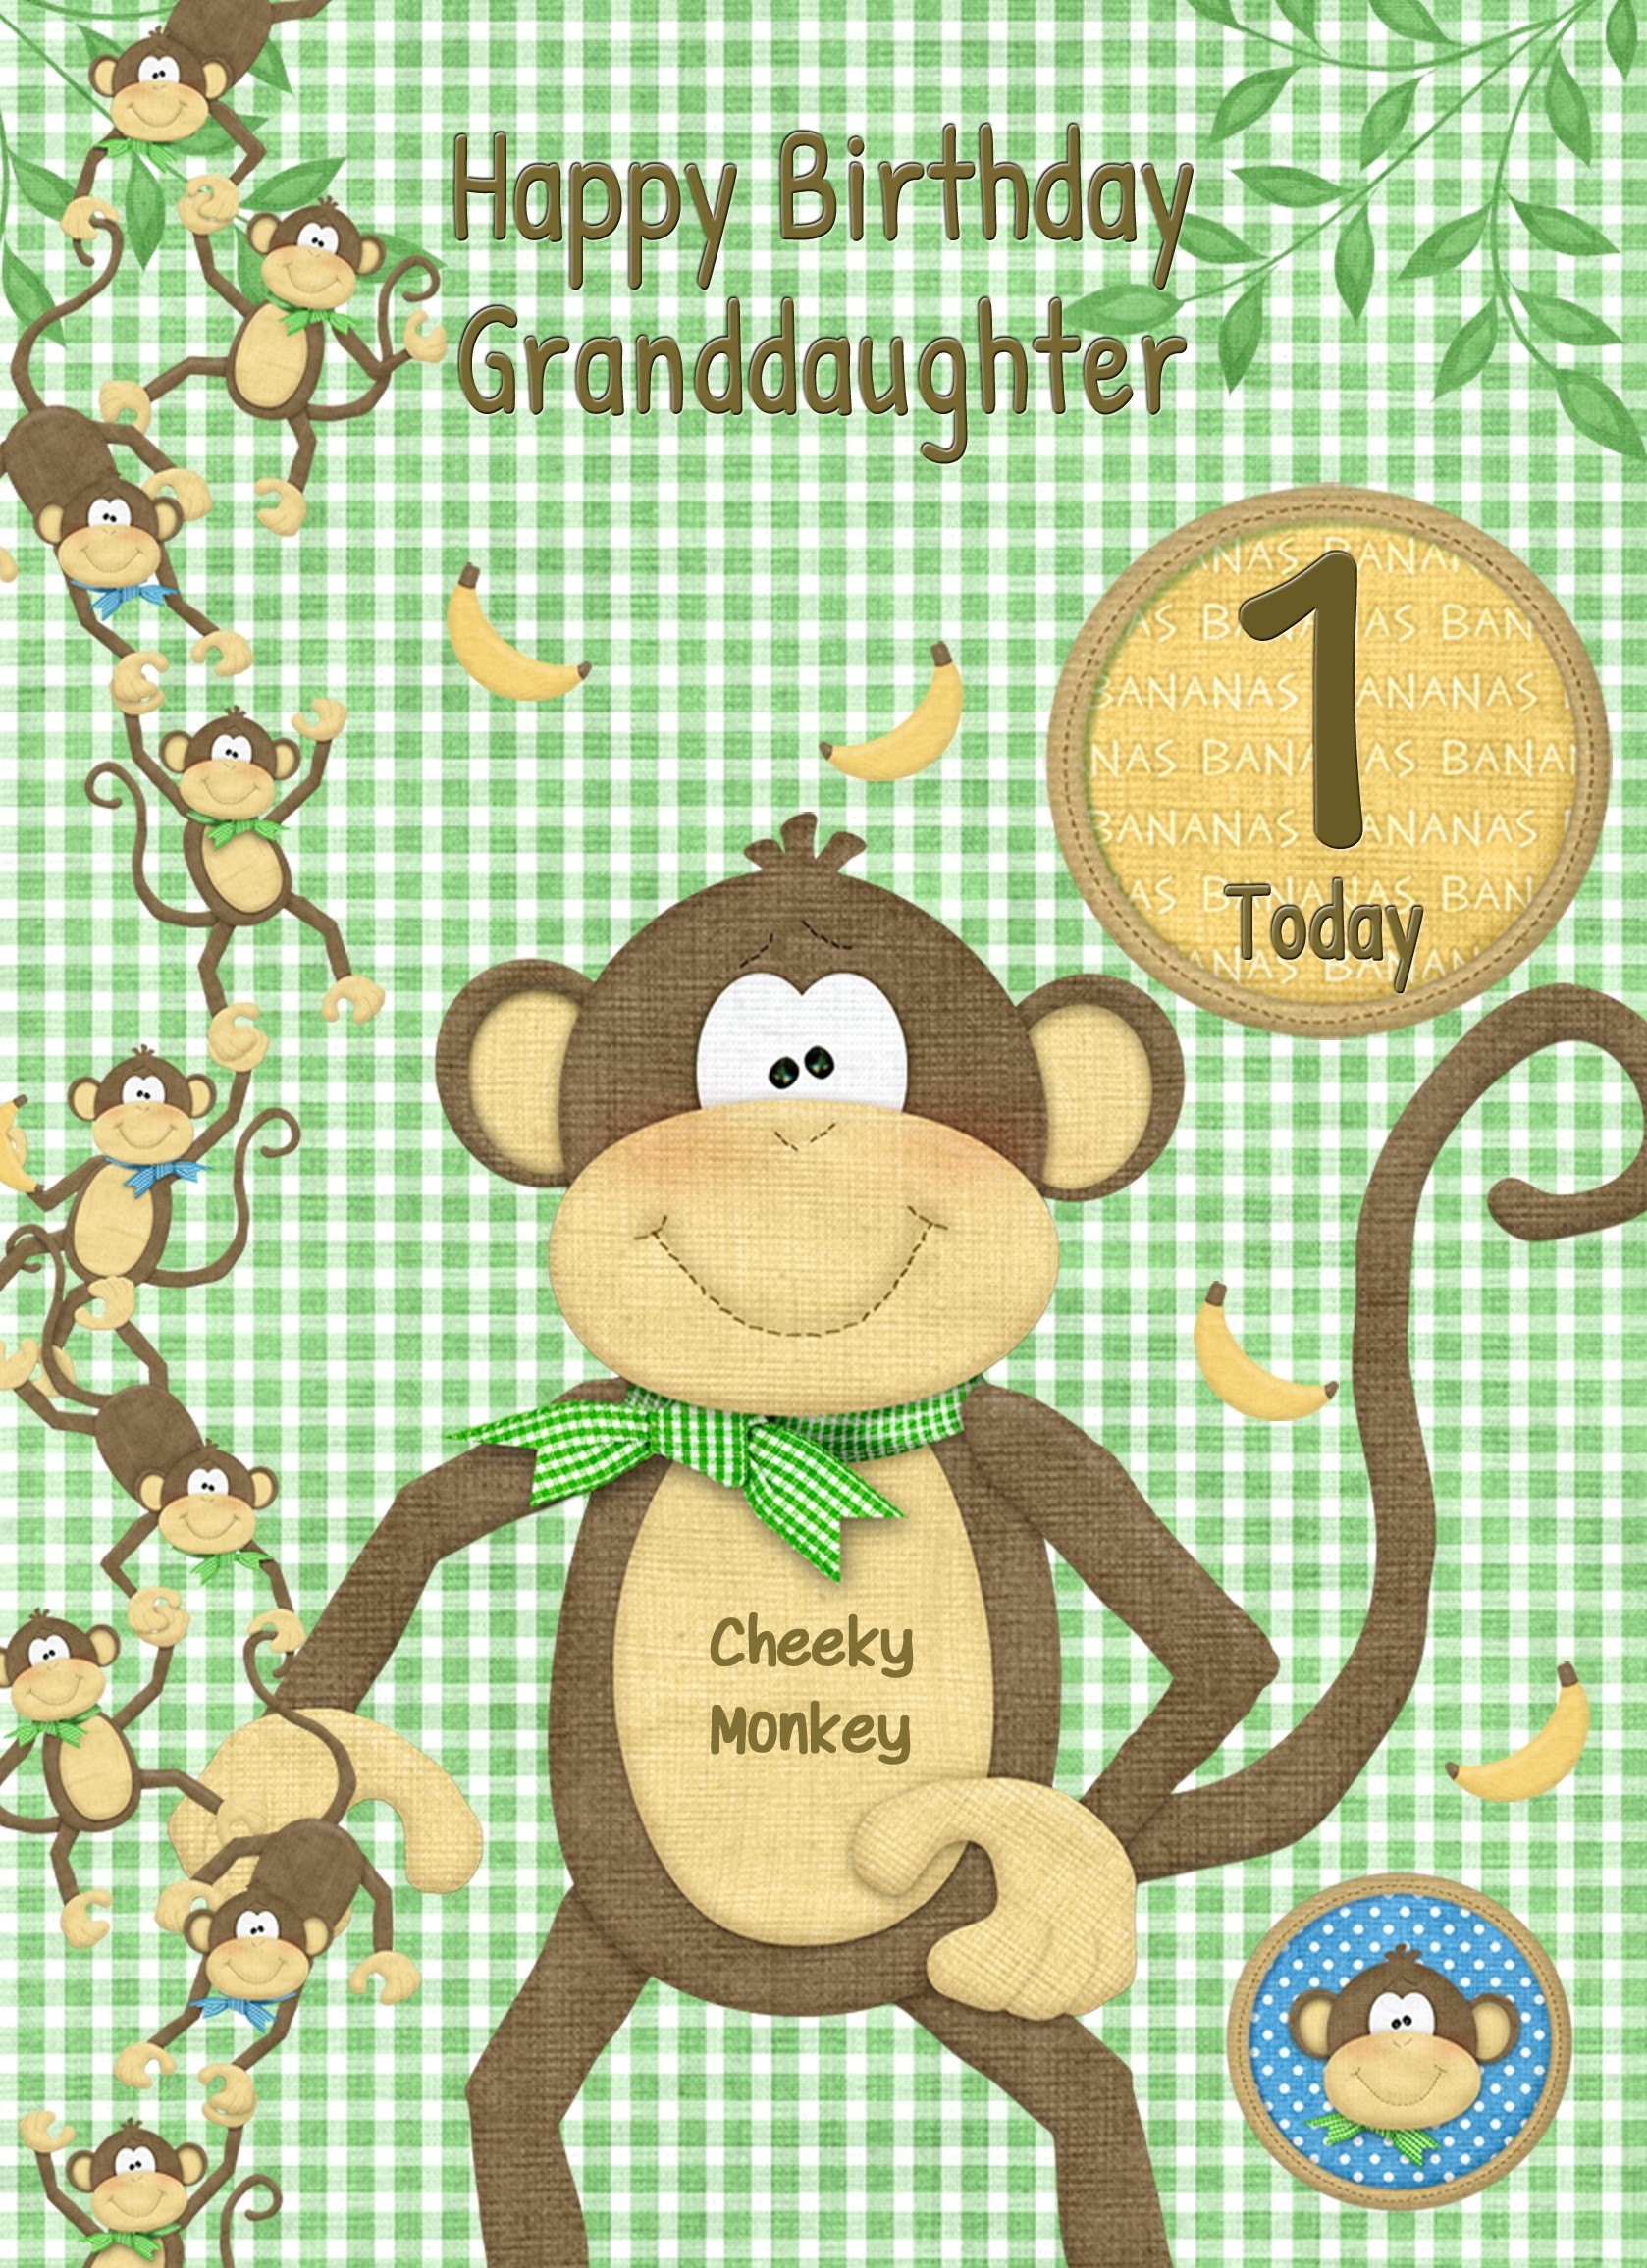 Kids 1st Birthday Cheeky Monkey Cartoon Card for Granddaughter